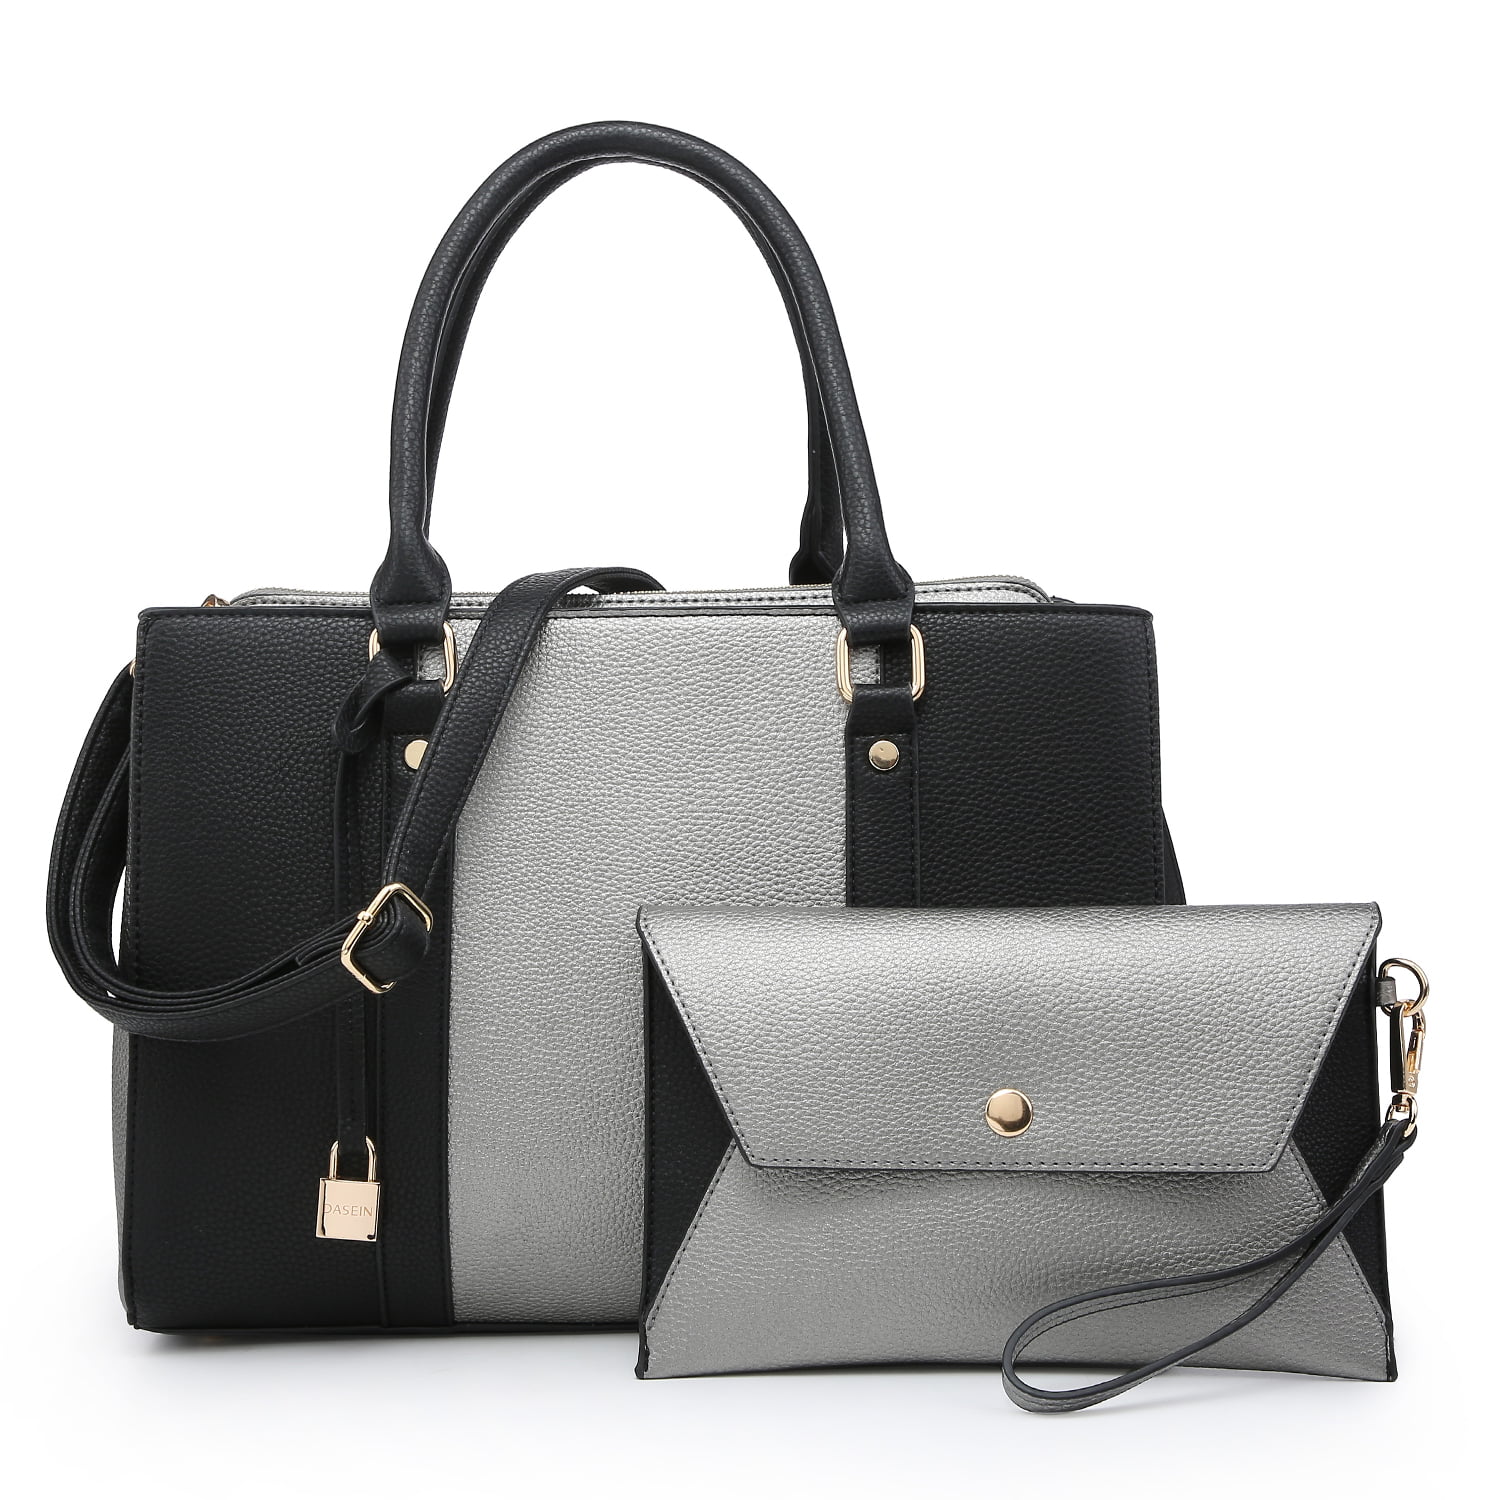 Dasein Women Fashion Two Tone Medium Handbags Top Handle Satchel Purse ...